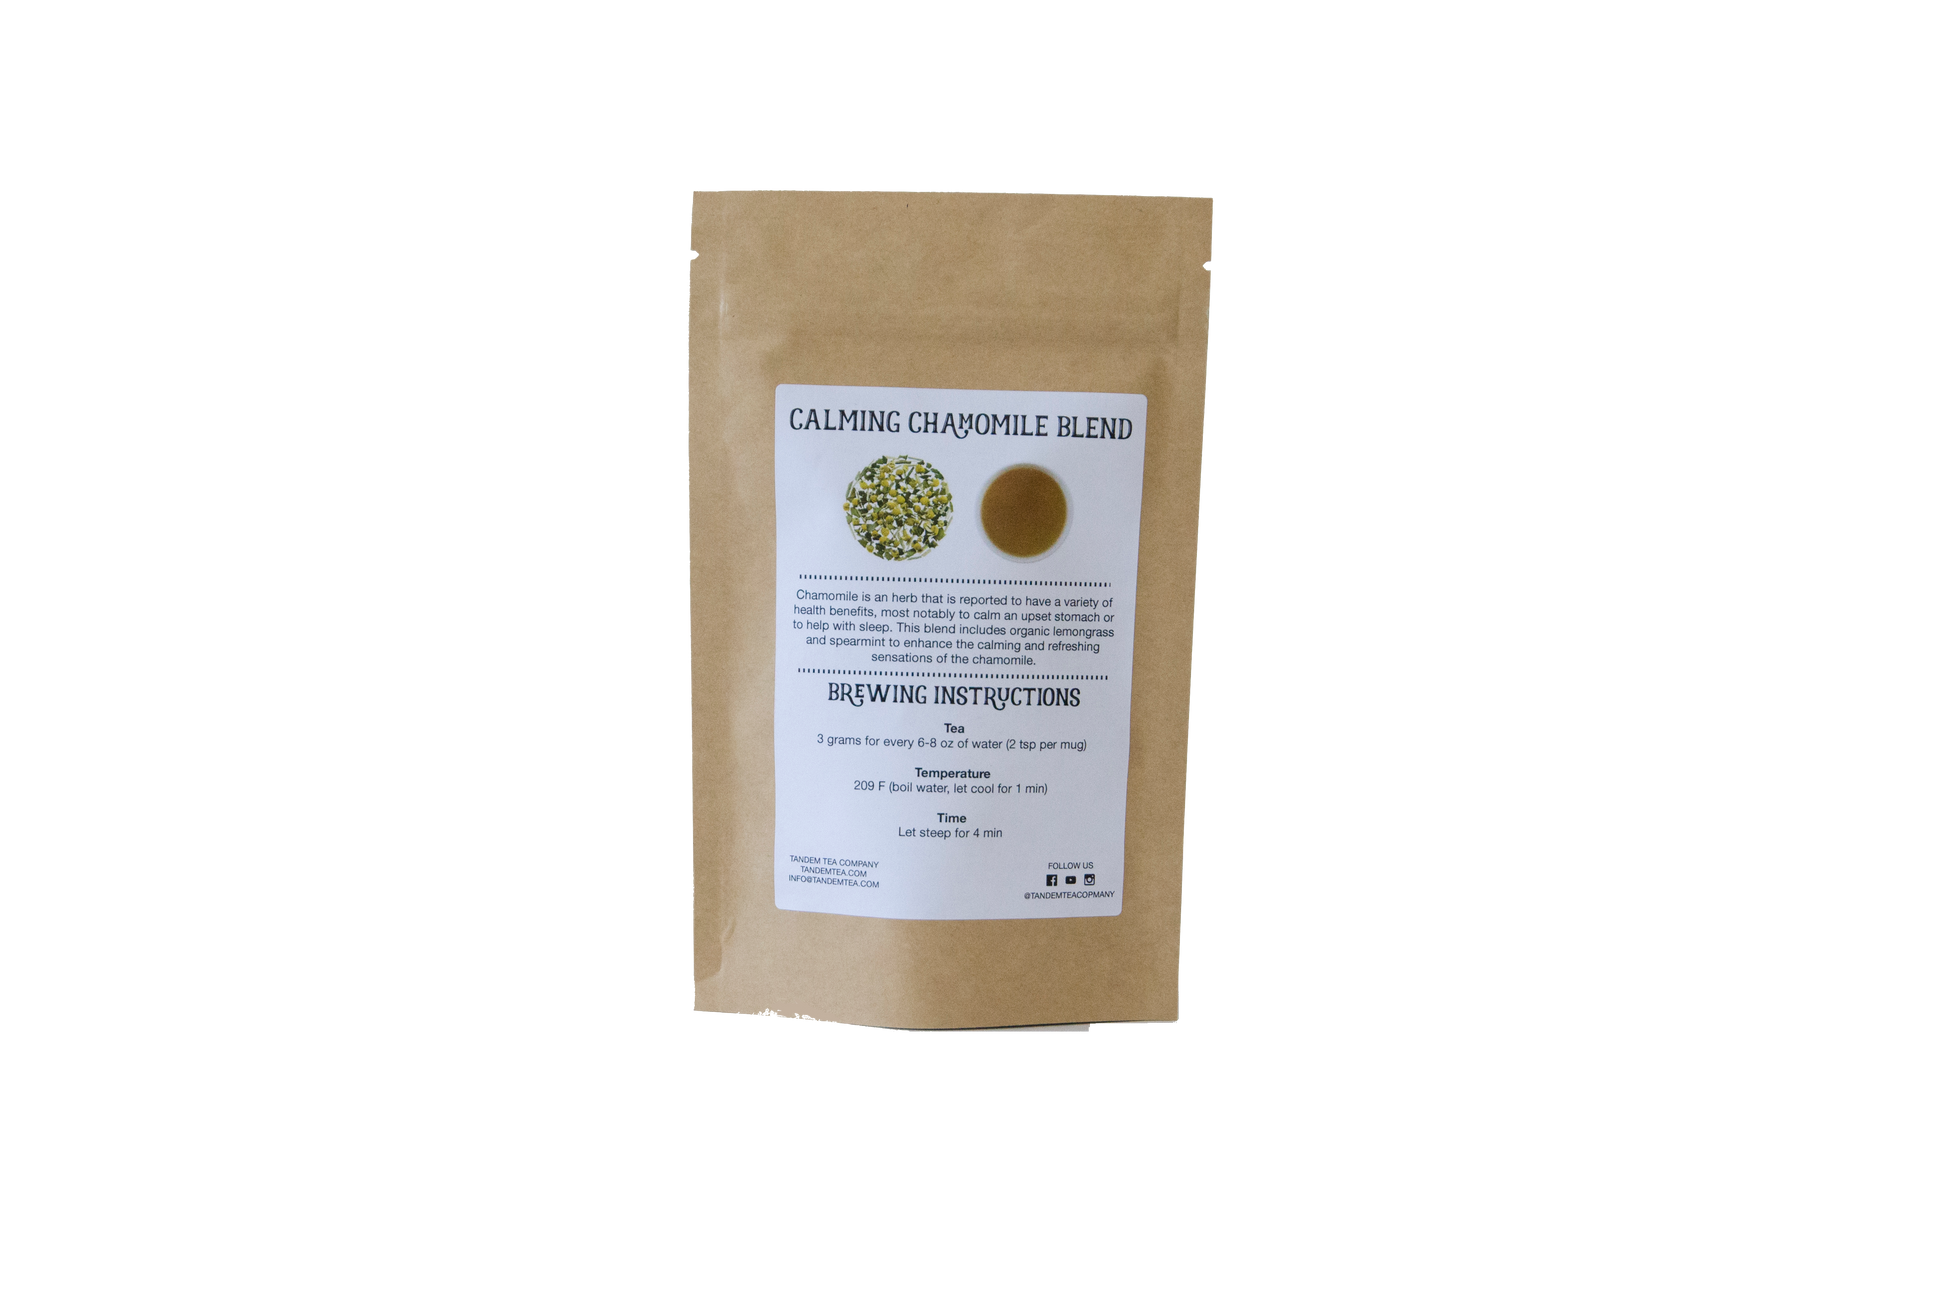 Calming Chamomile - Organic Herbal Tea with Chamomile, Lemongrass, Lemon Verbena, and Spearmint